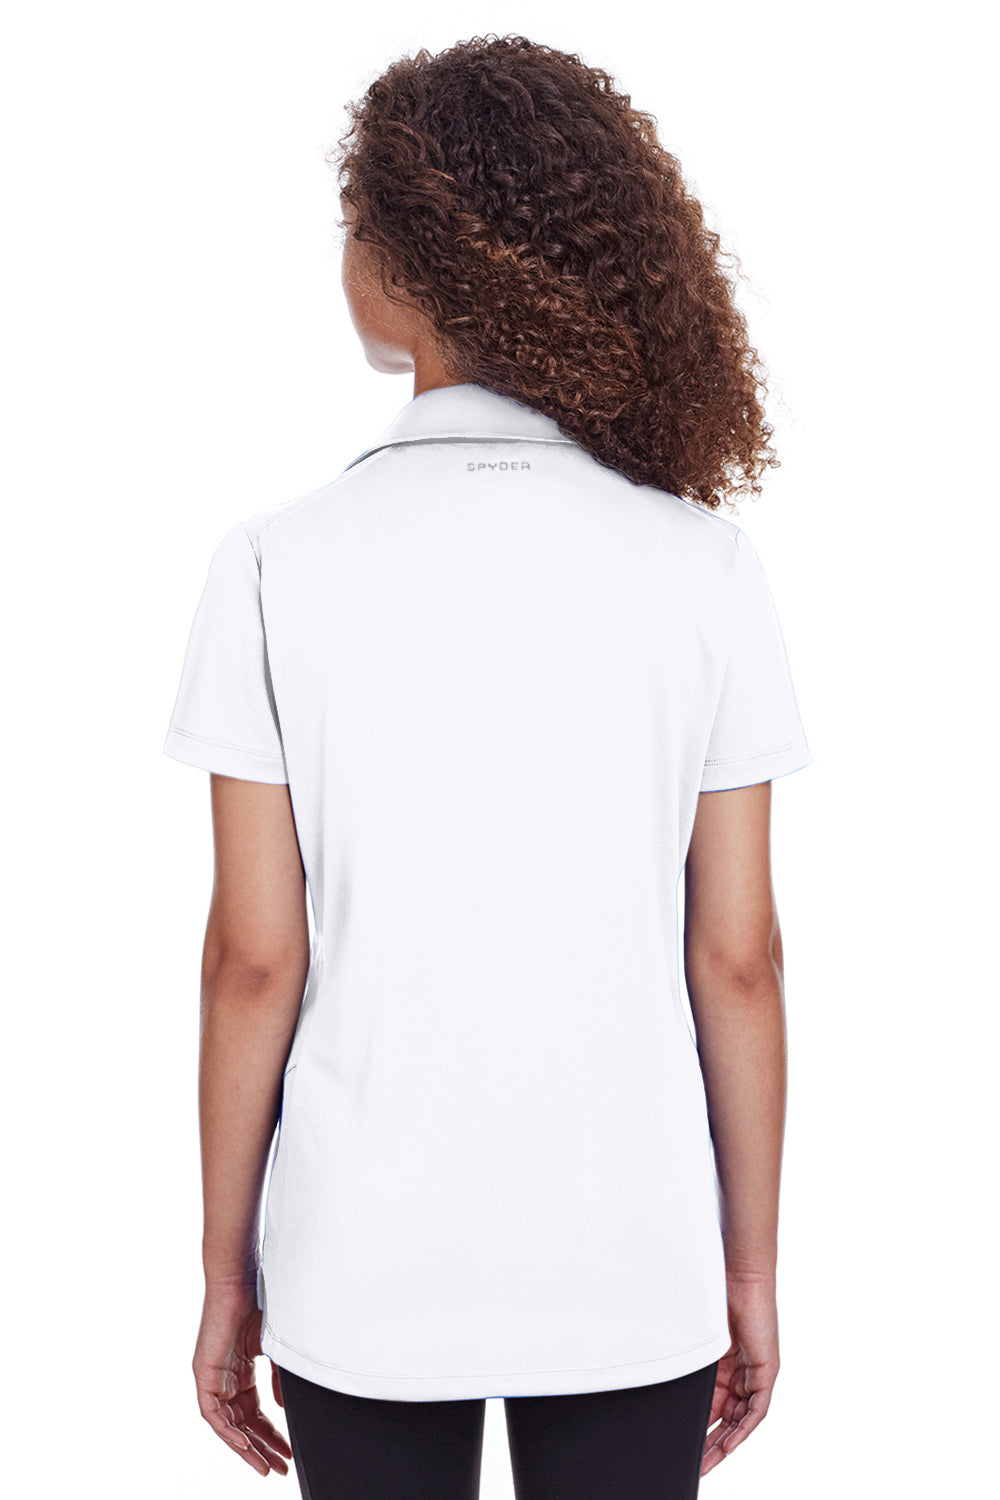 Spyder S16519 Womens Freestyle Short Sleeve Polo Shirt White Back